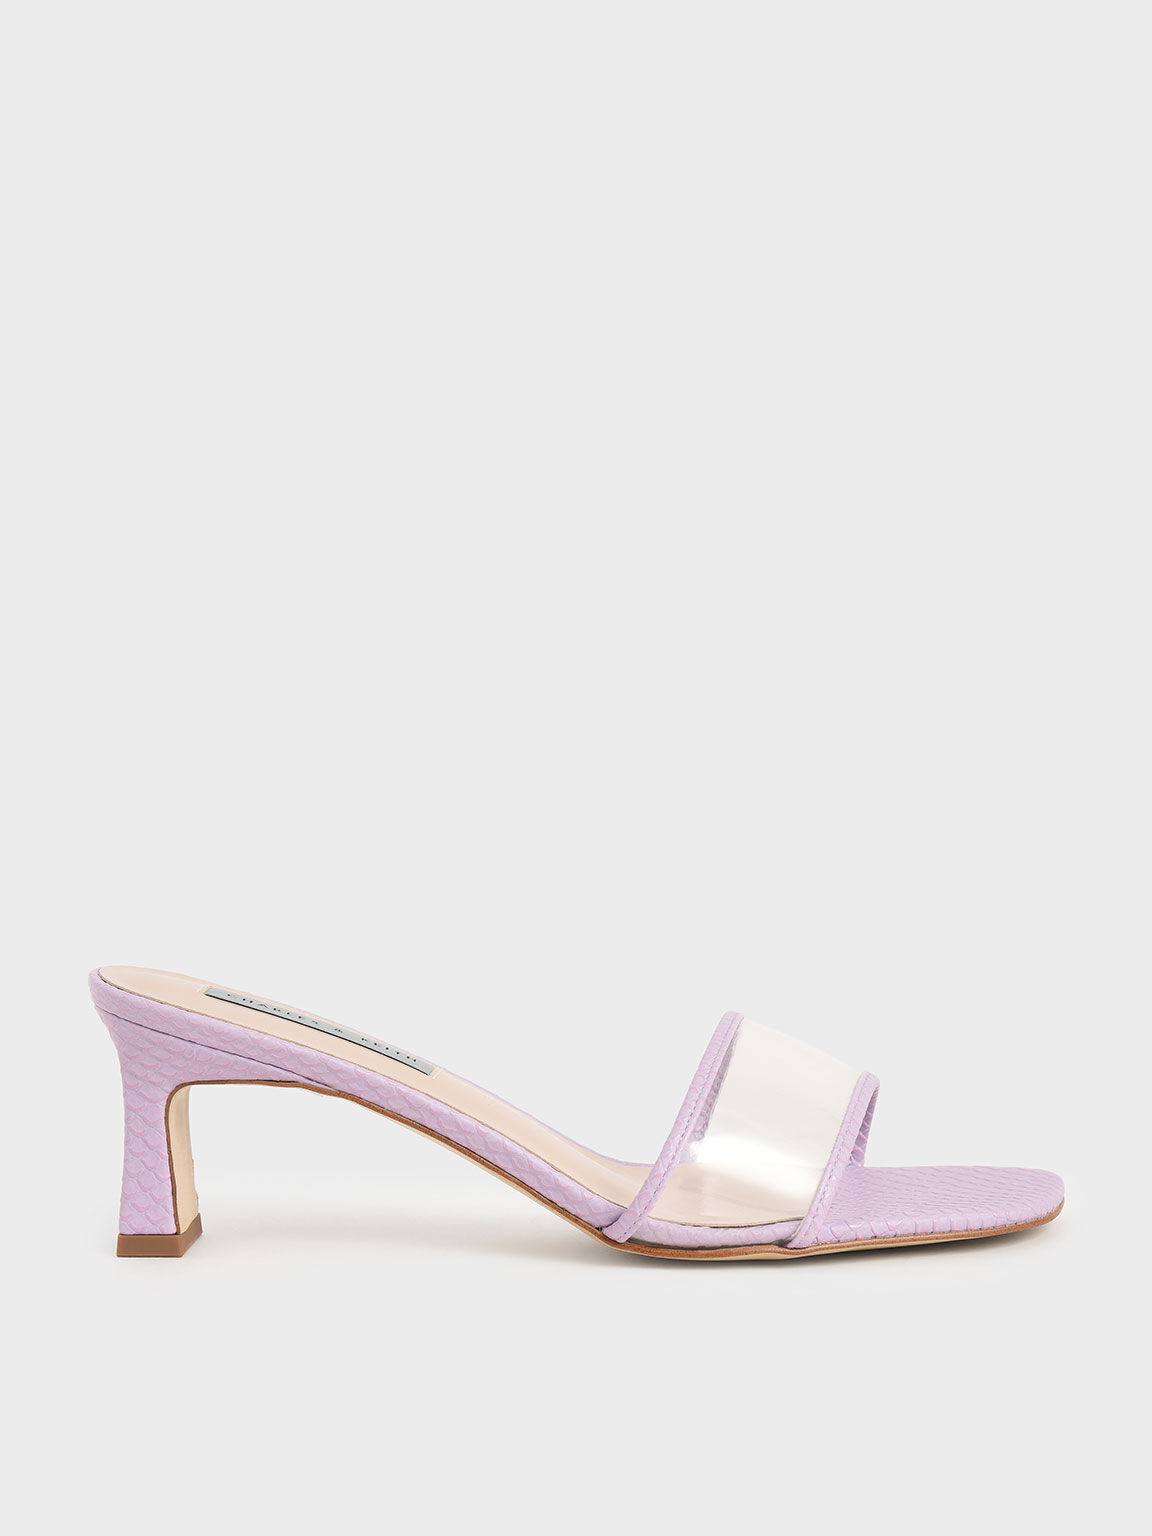 Buy > purple heeled mules > in stock